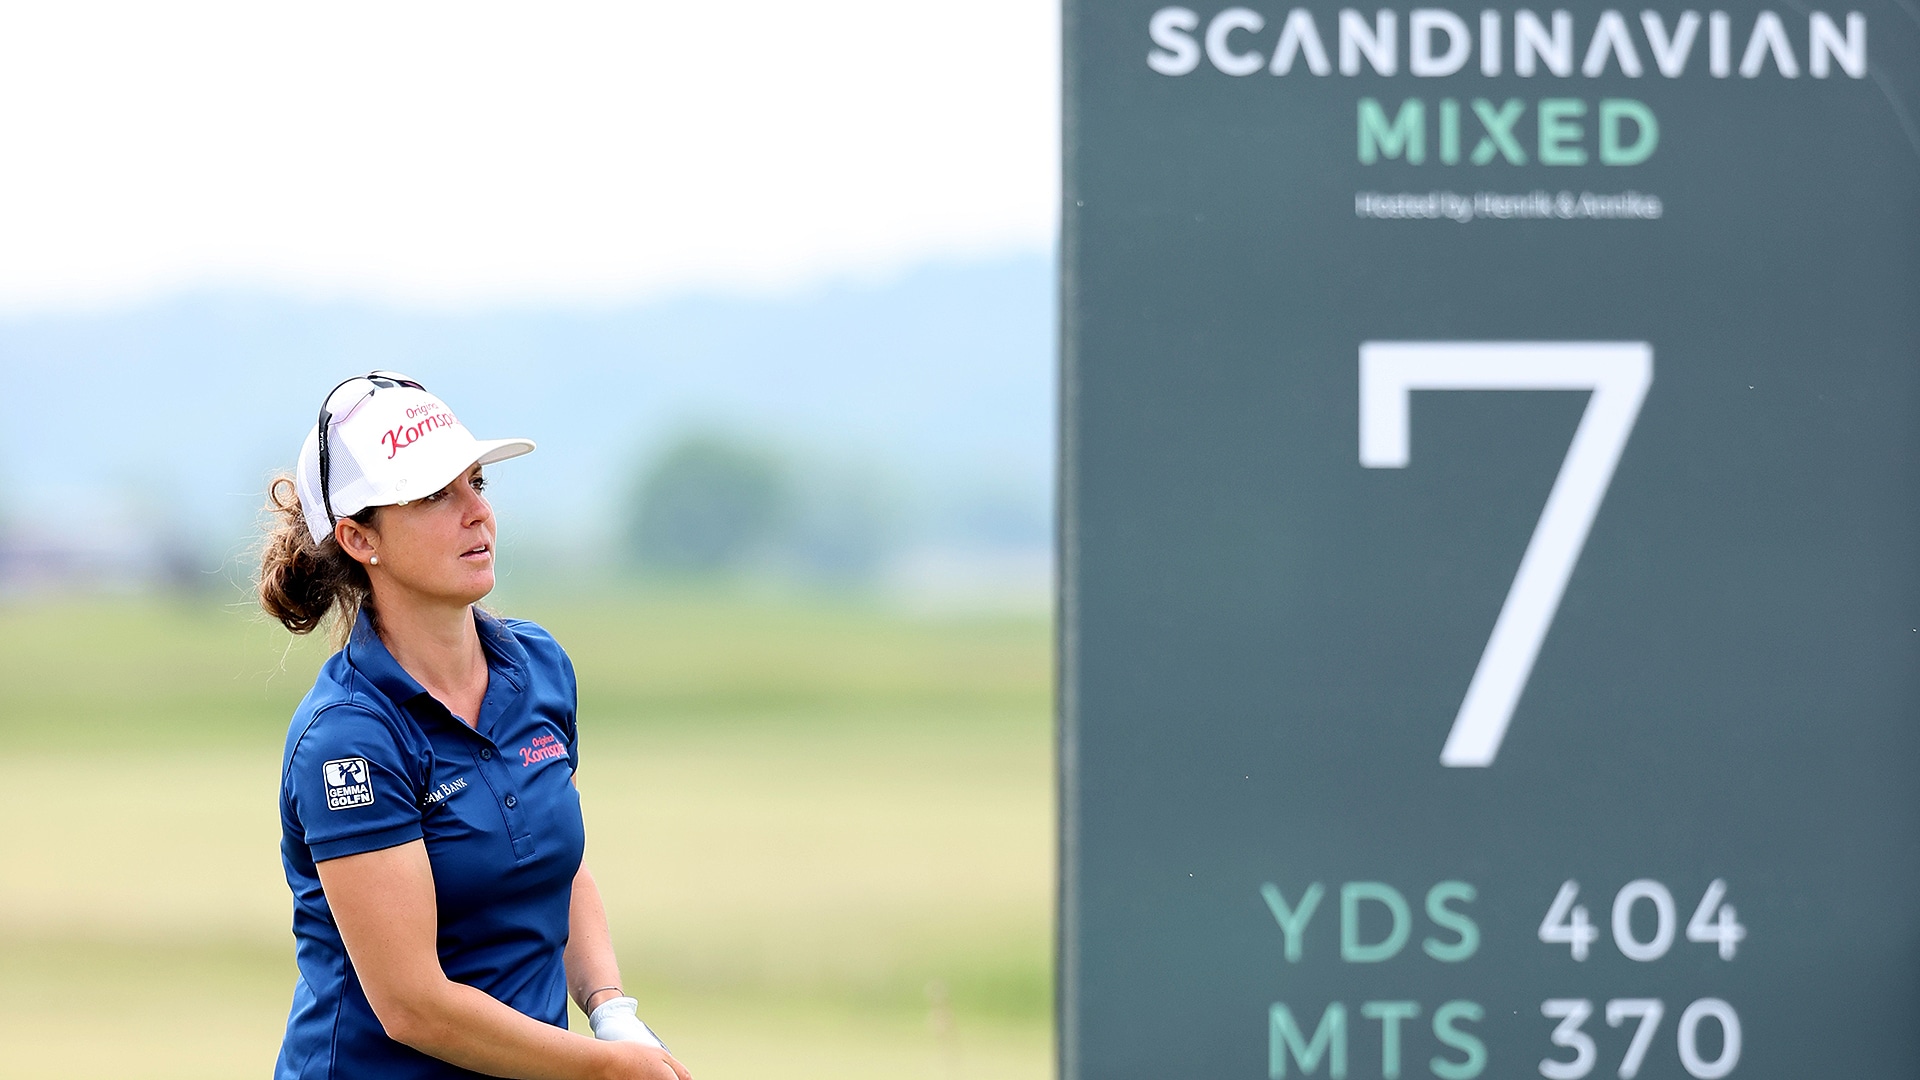 Christine Wolf, Sam Horsfield share lead at inaugural Scandinavian Mixed